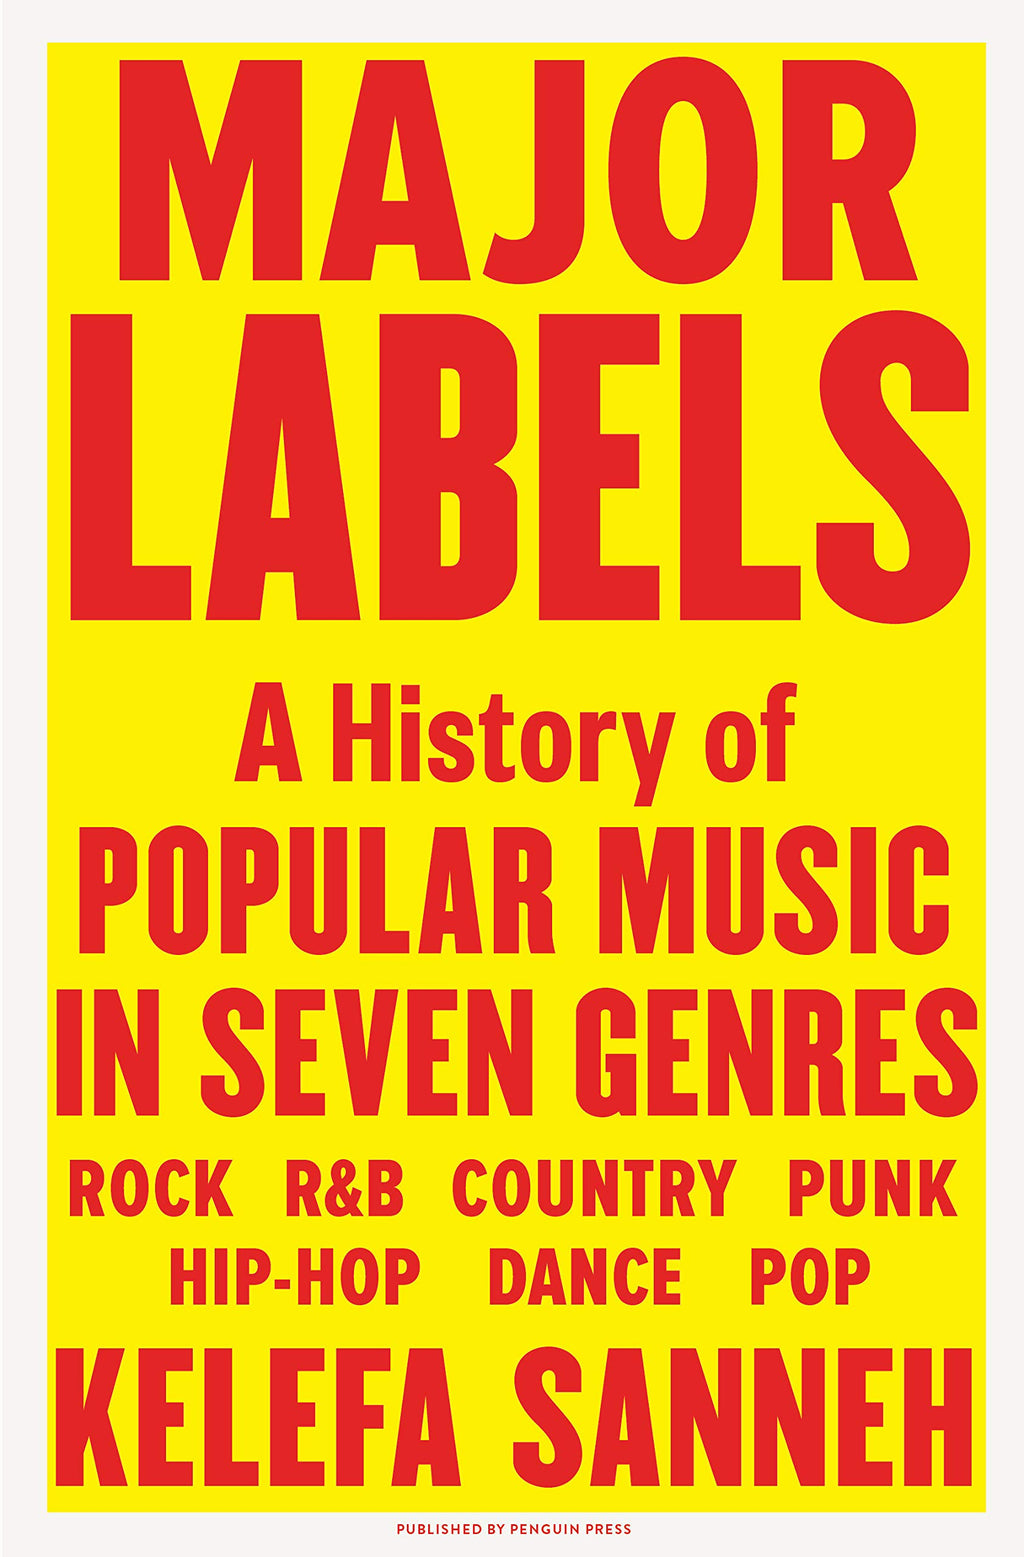 Major Labels A History of Popular Music in Seven Genres by Kelefa Sanneh